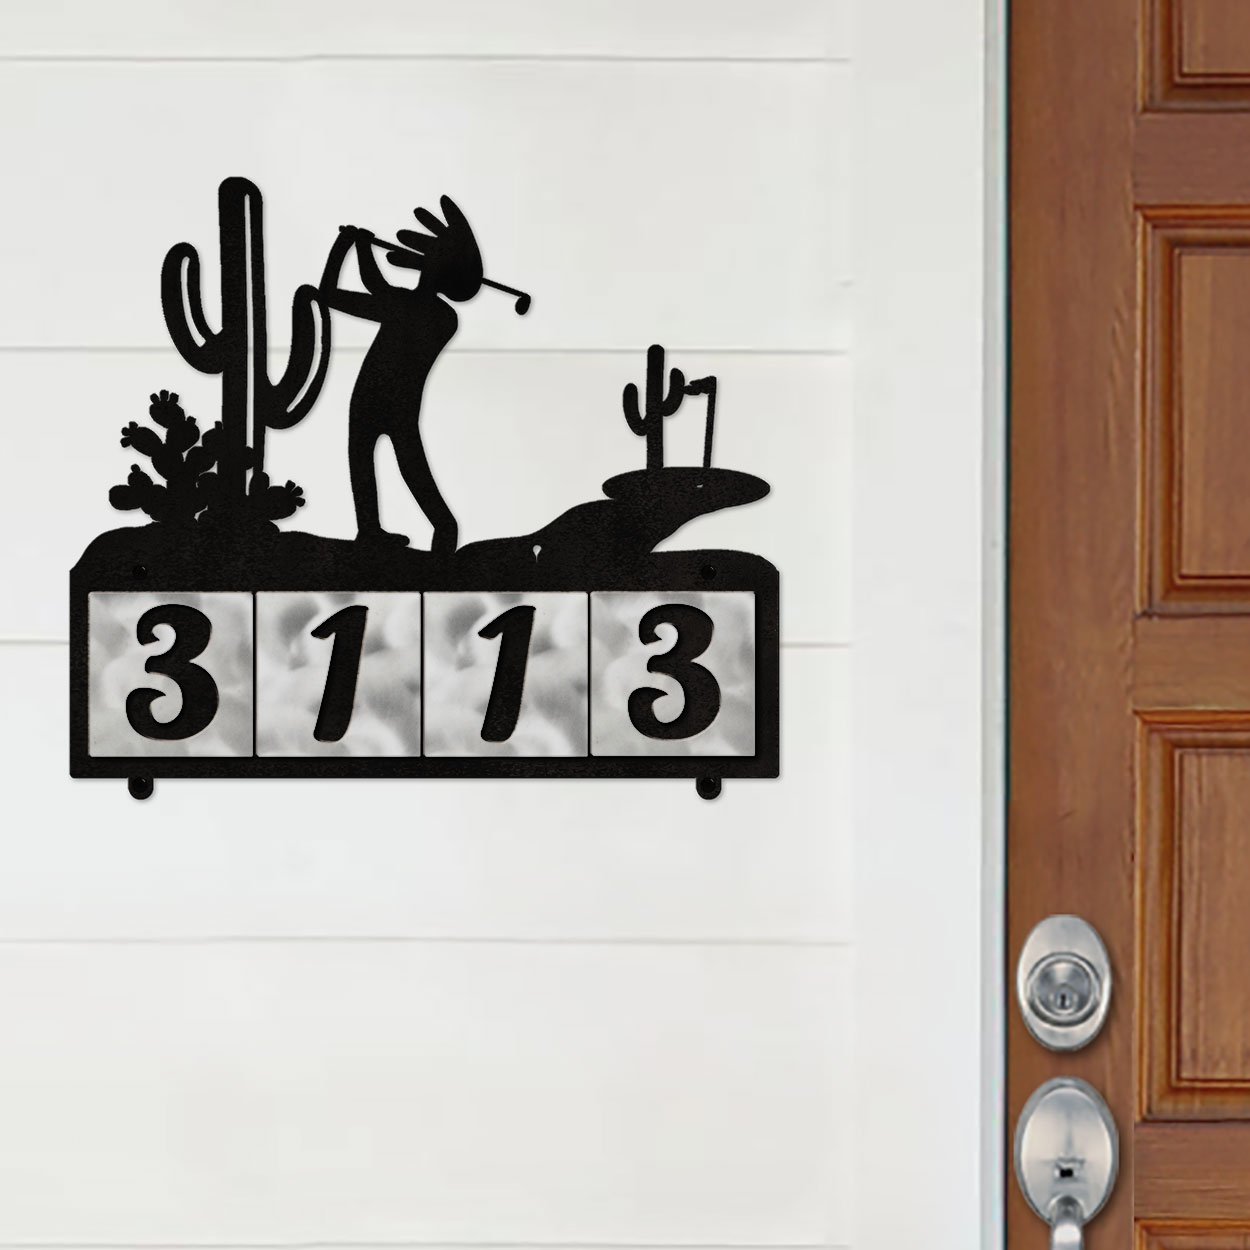 607134 - Kokopelli Desert Golfer Design 4-Digit Horizontal 4-inch Tile Outdoor House Numbers